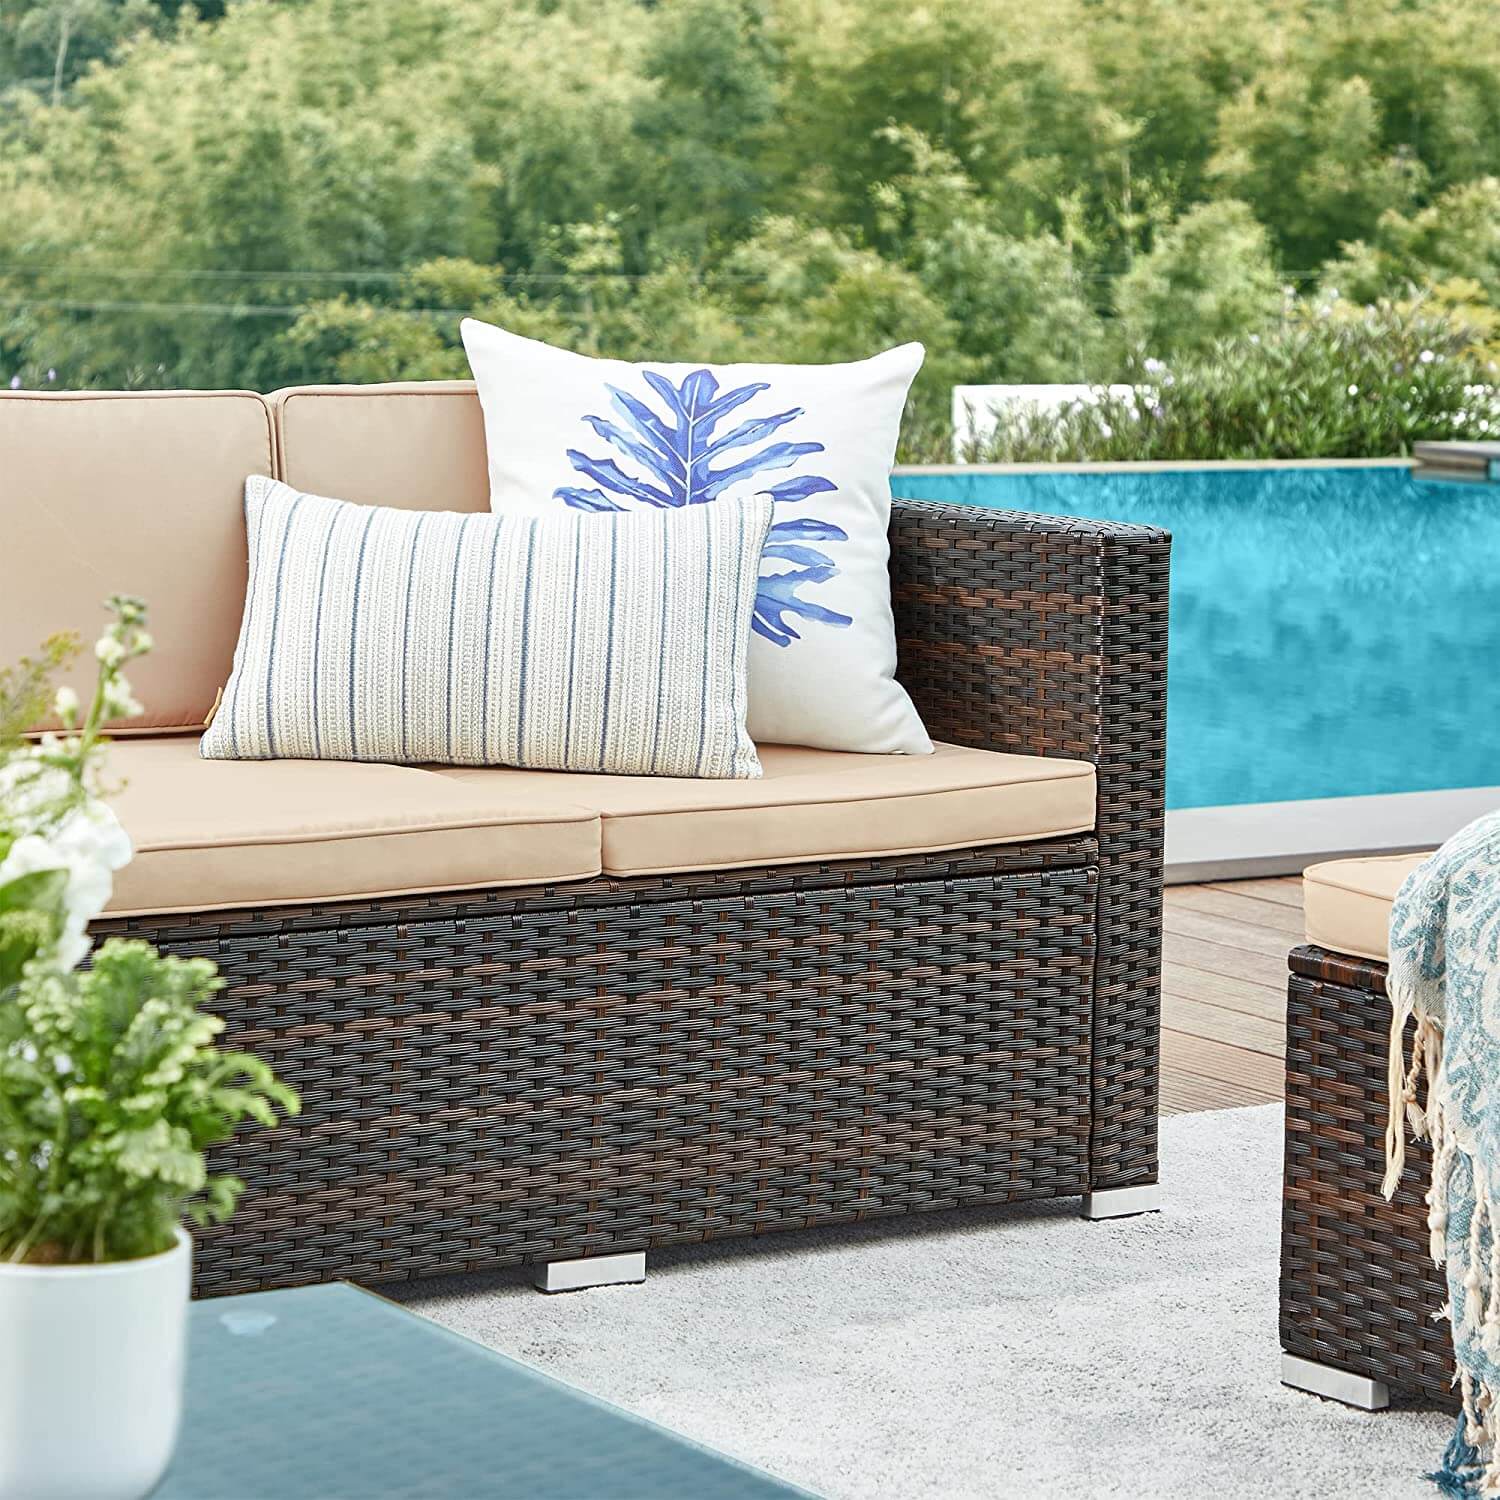 Win a 4 Seater Garden Rattan Sofa Set